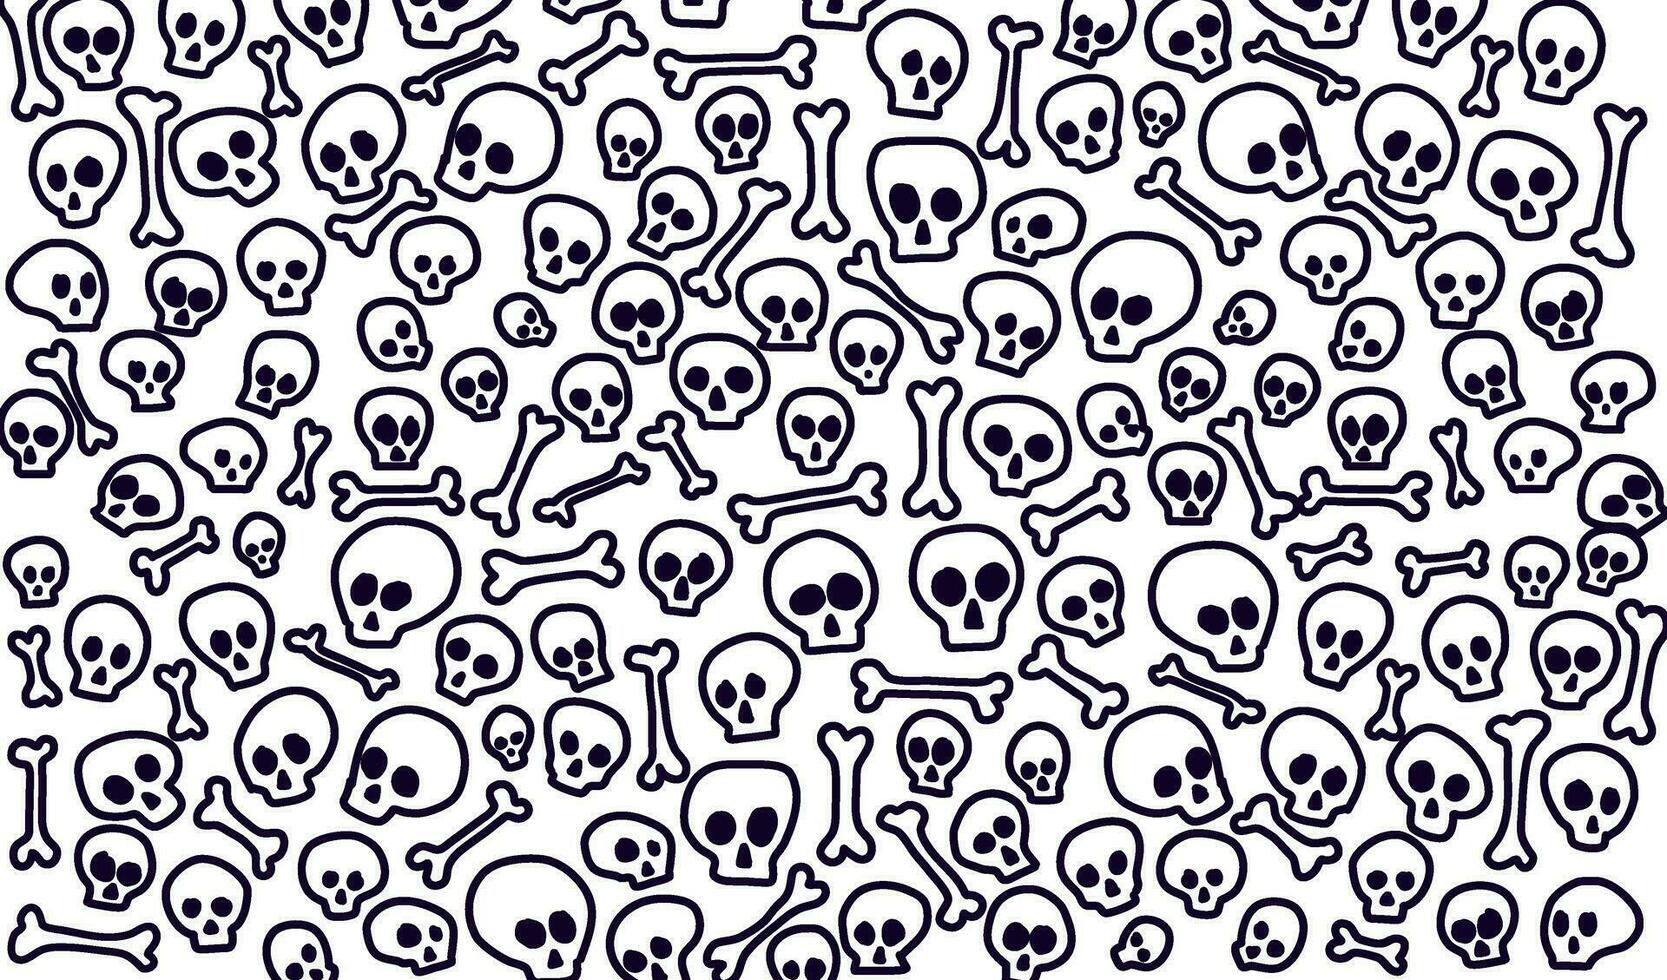 skull doodle background. skull pattern background. skull doodle wallpaper. skull doodle print fabric. vector